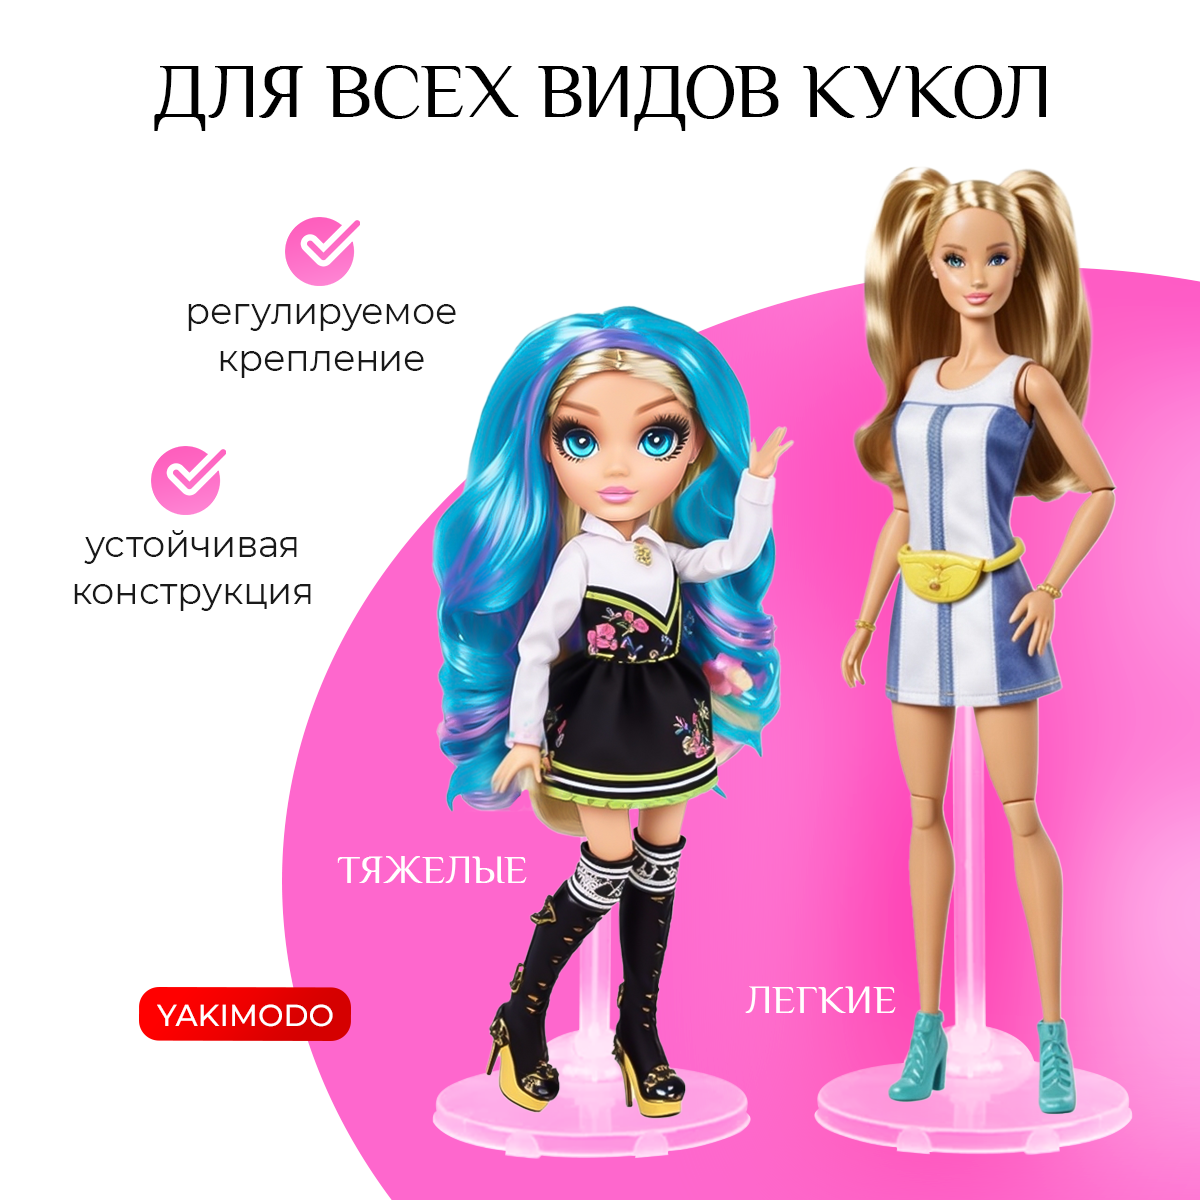 Подставка для кукол набор 10шт, аксессуары для Барби Barbie, Братц Bratz, Блайз Blythe, Монстер Хай Monster High, Инчантималс, Эверяшек, Тильда и др